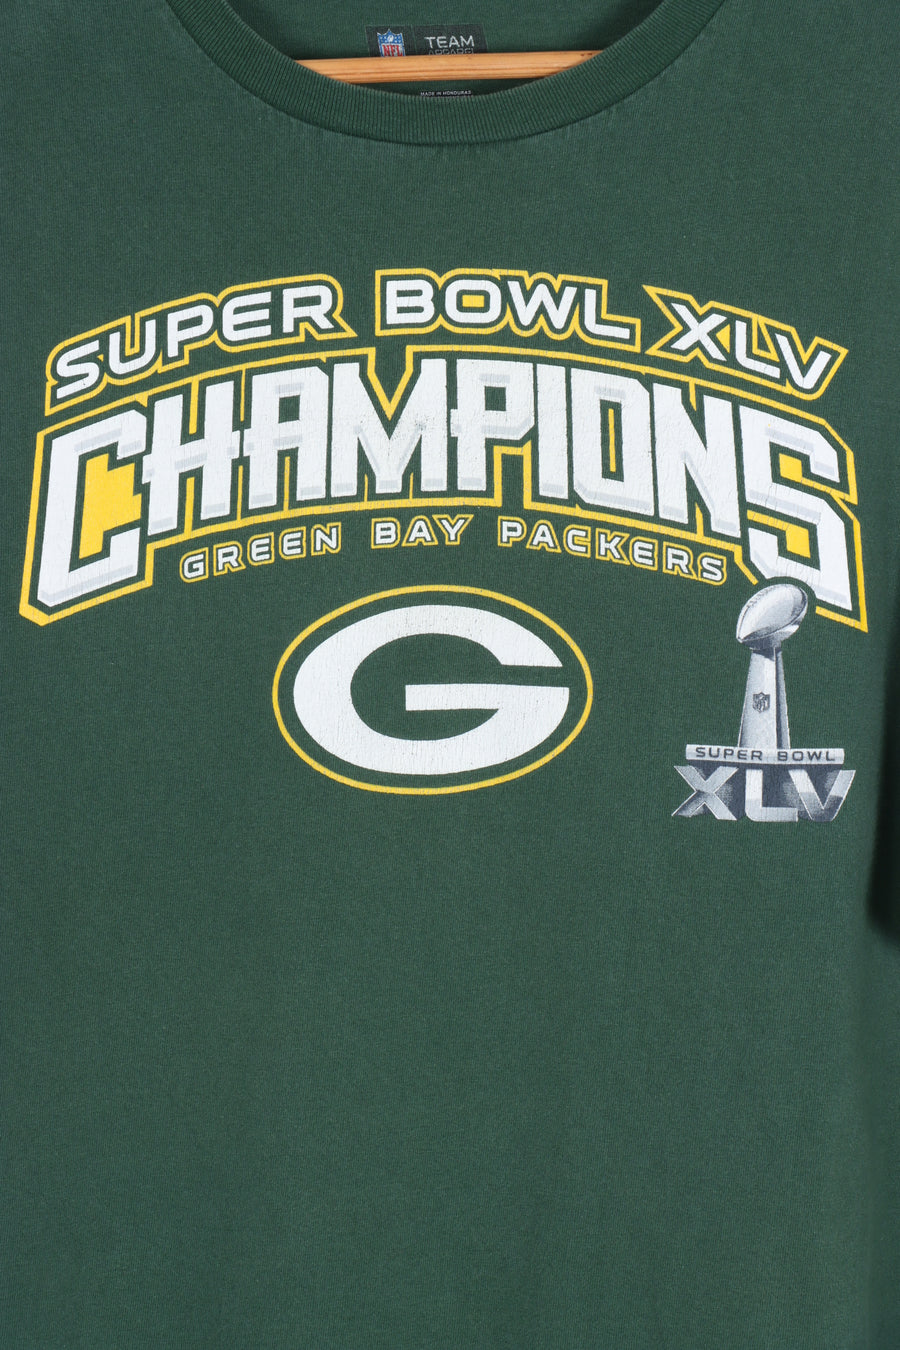 Super Bowl XLV Champions Green Bay Packers NFL Tee (XL)